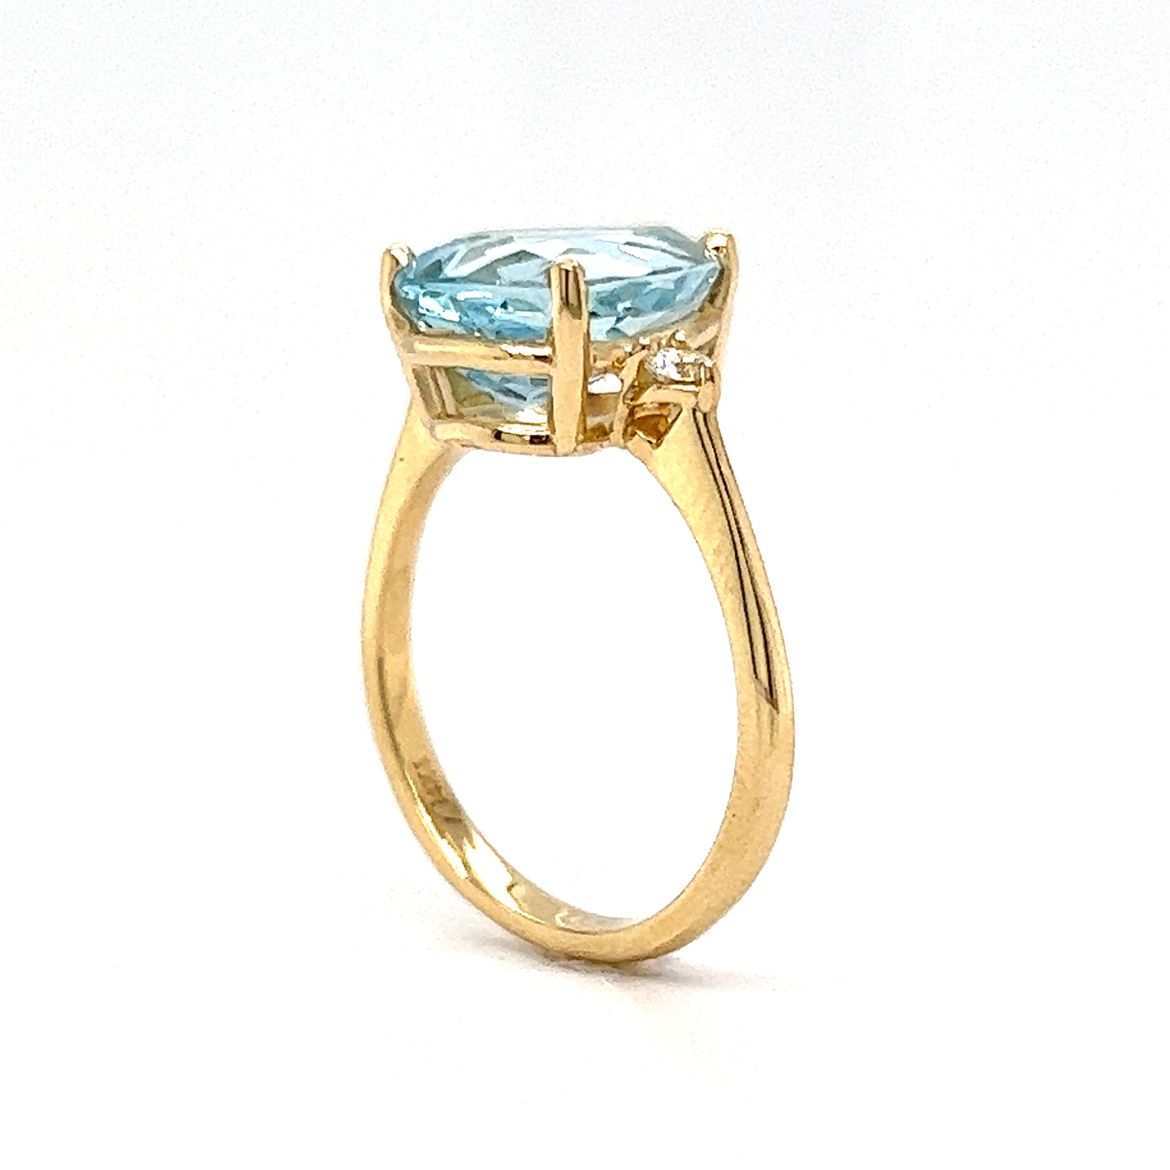 3.72 Carat Aquamarine Engagement Ring in 14k Yellow Gold